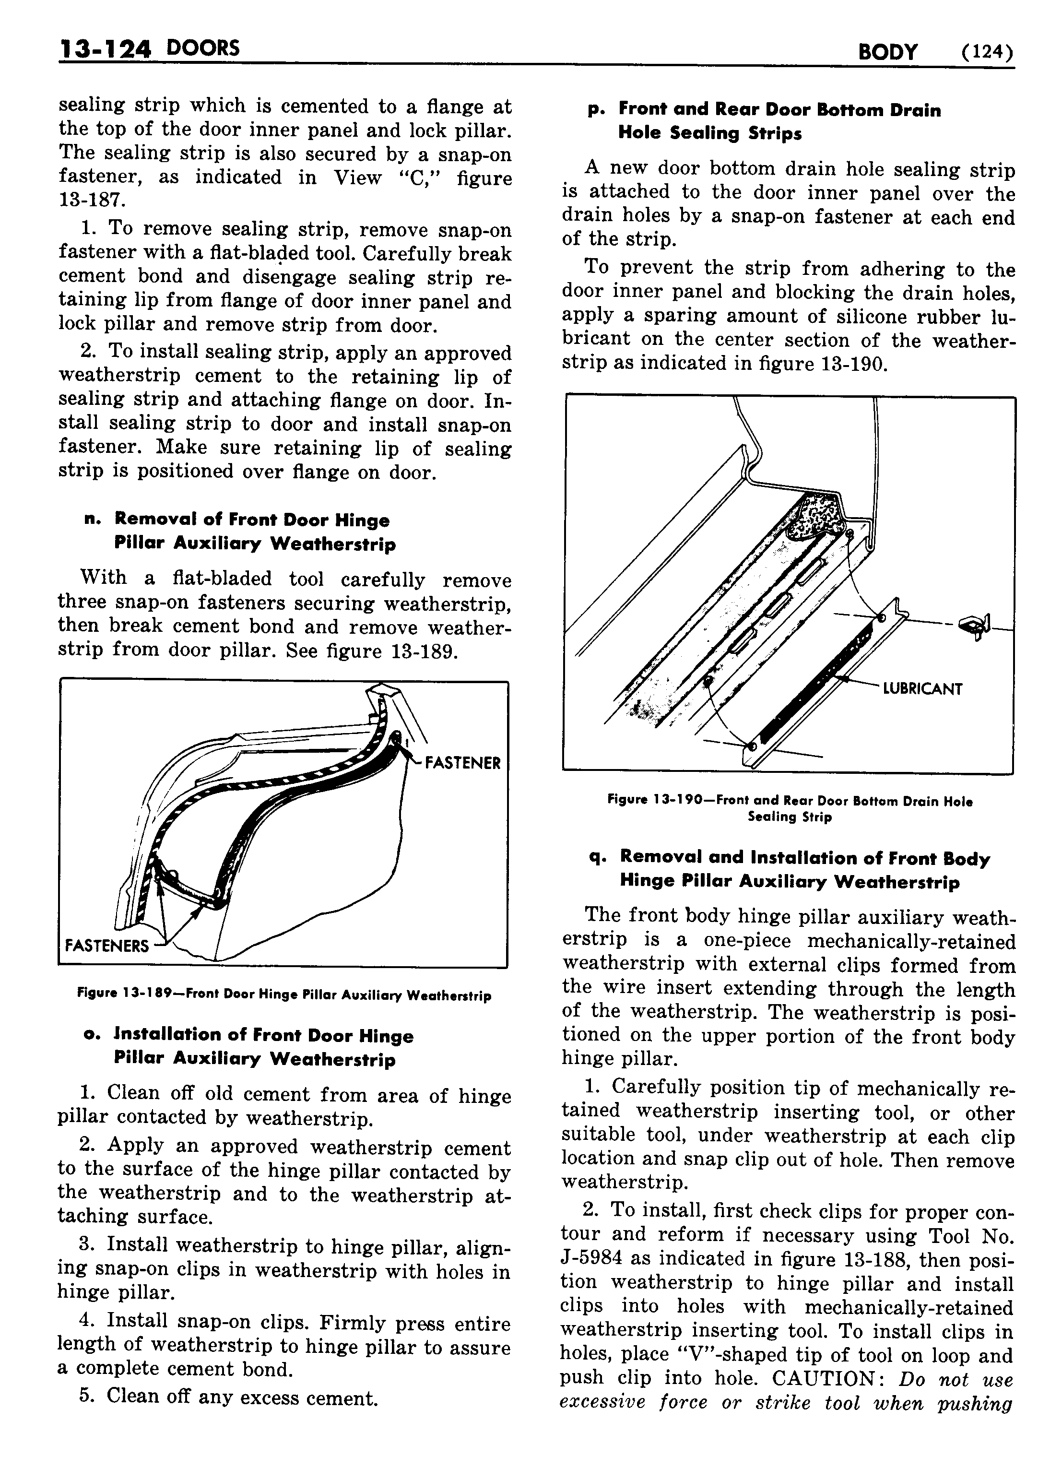 n_1957 Buick Body Service Manual-126-126.jpg